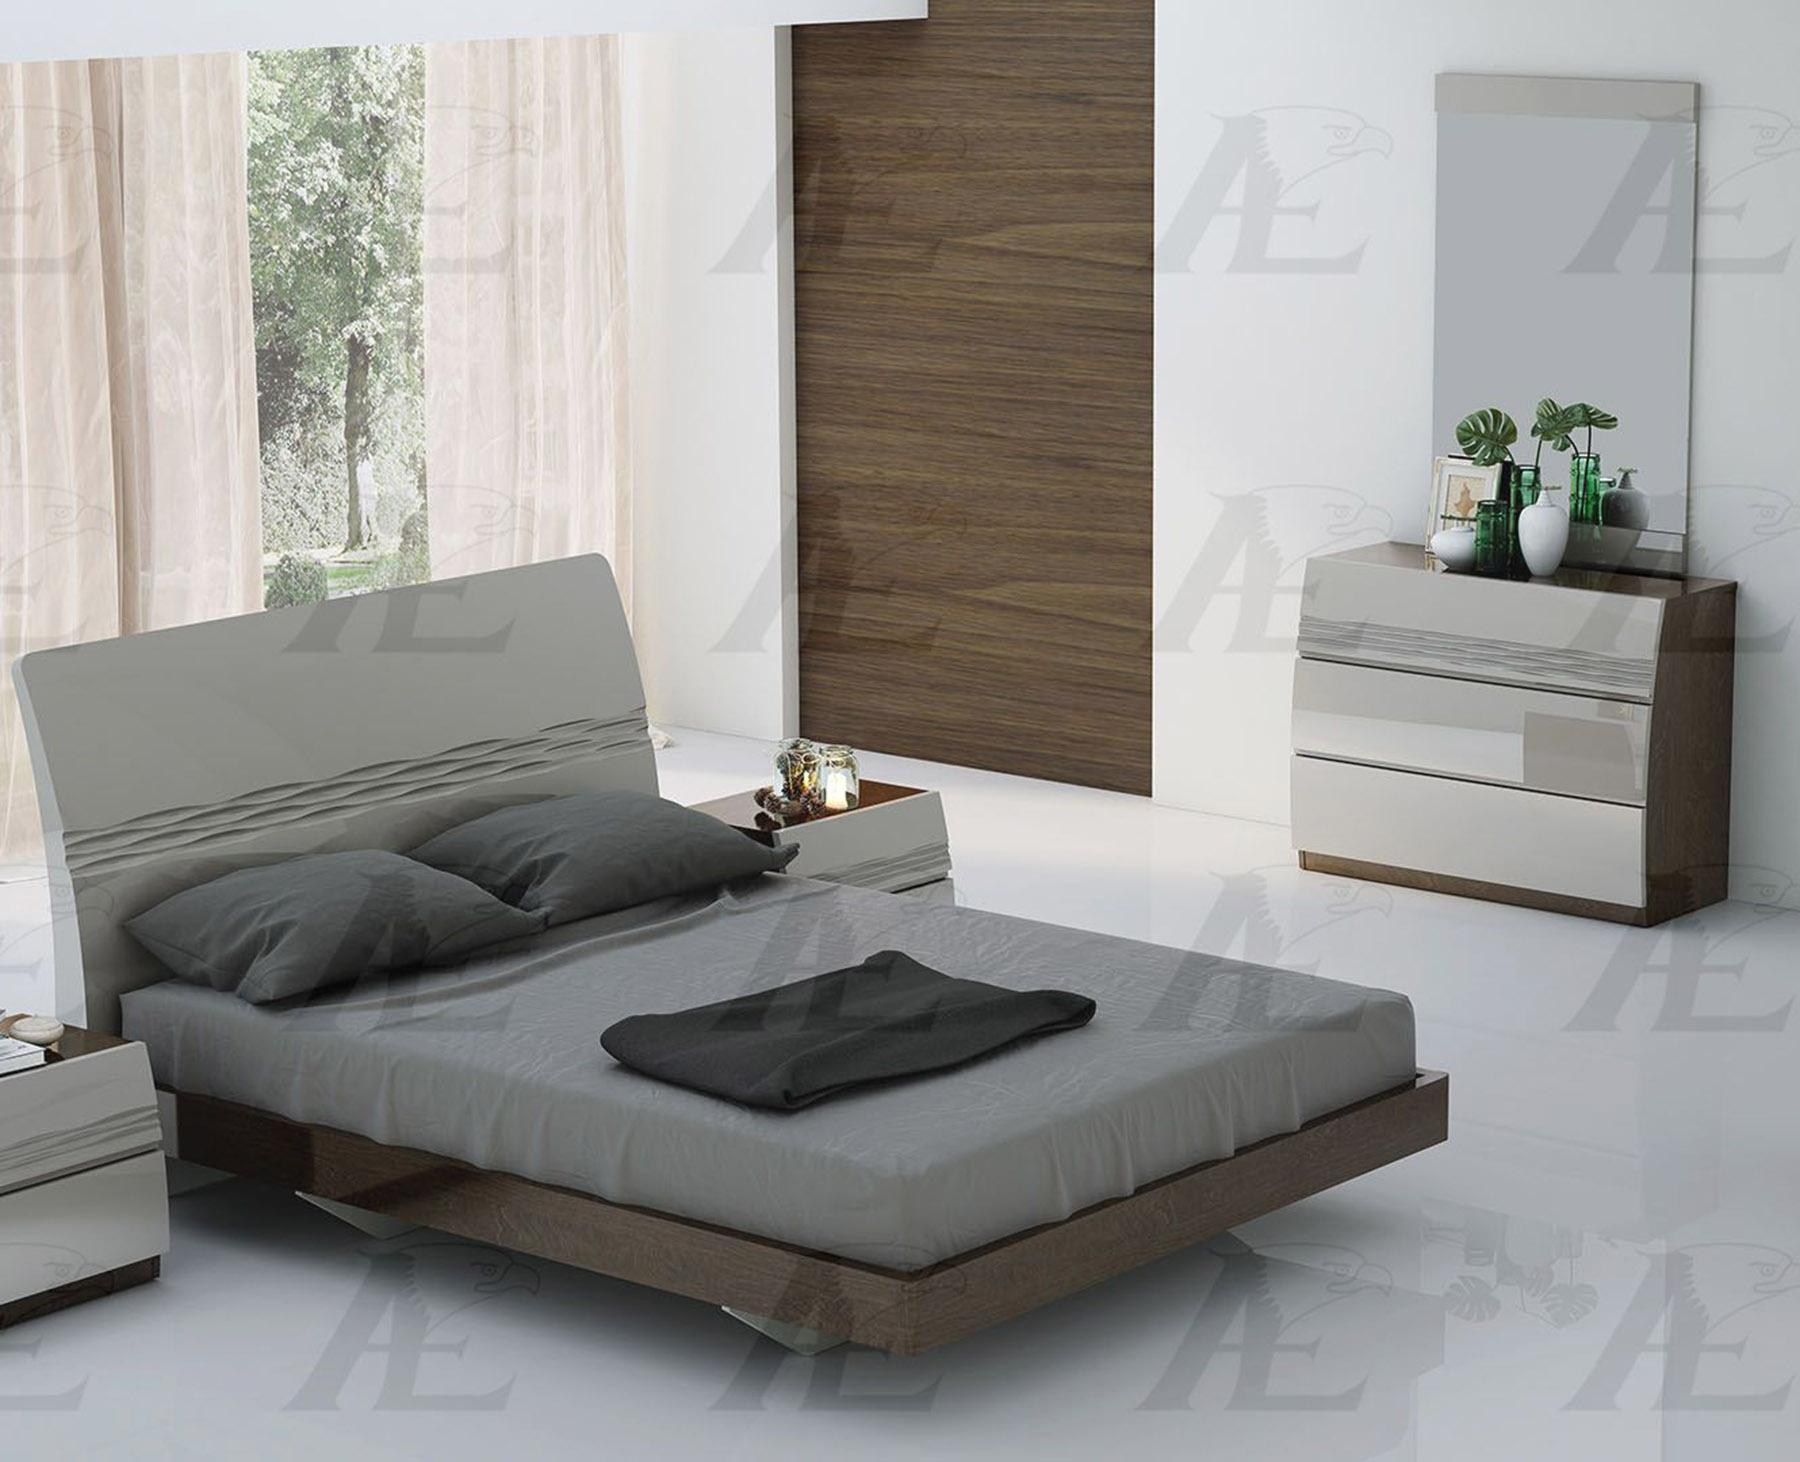 

    
American Eagle Furniture B-P102-Q Platform Bed Light Gray/Brown B-P102-Q
